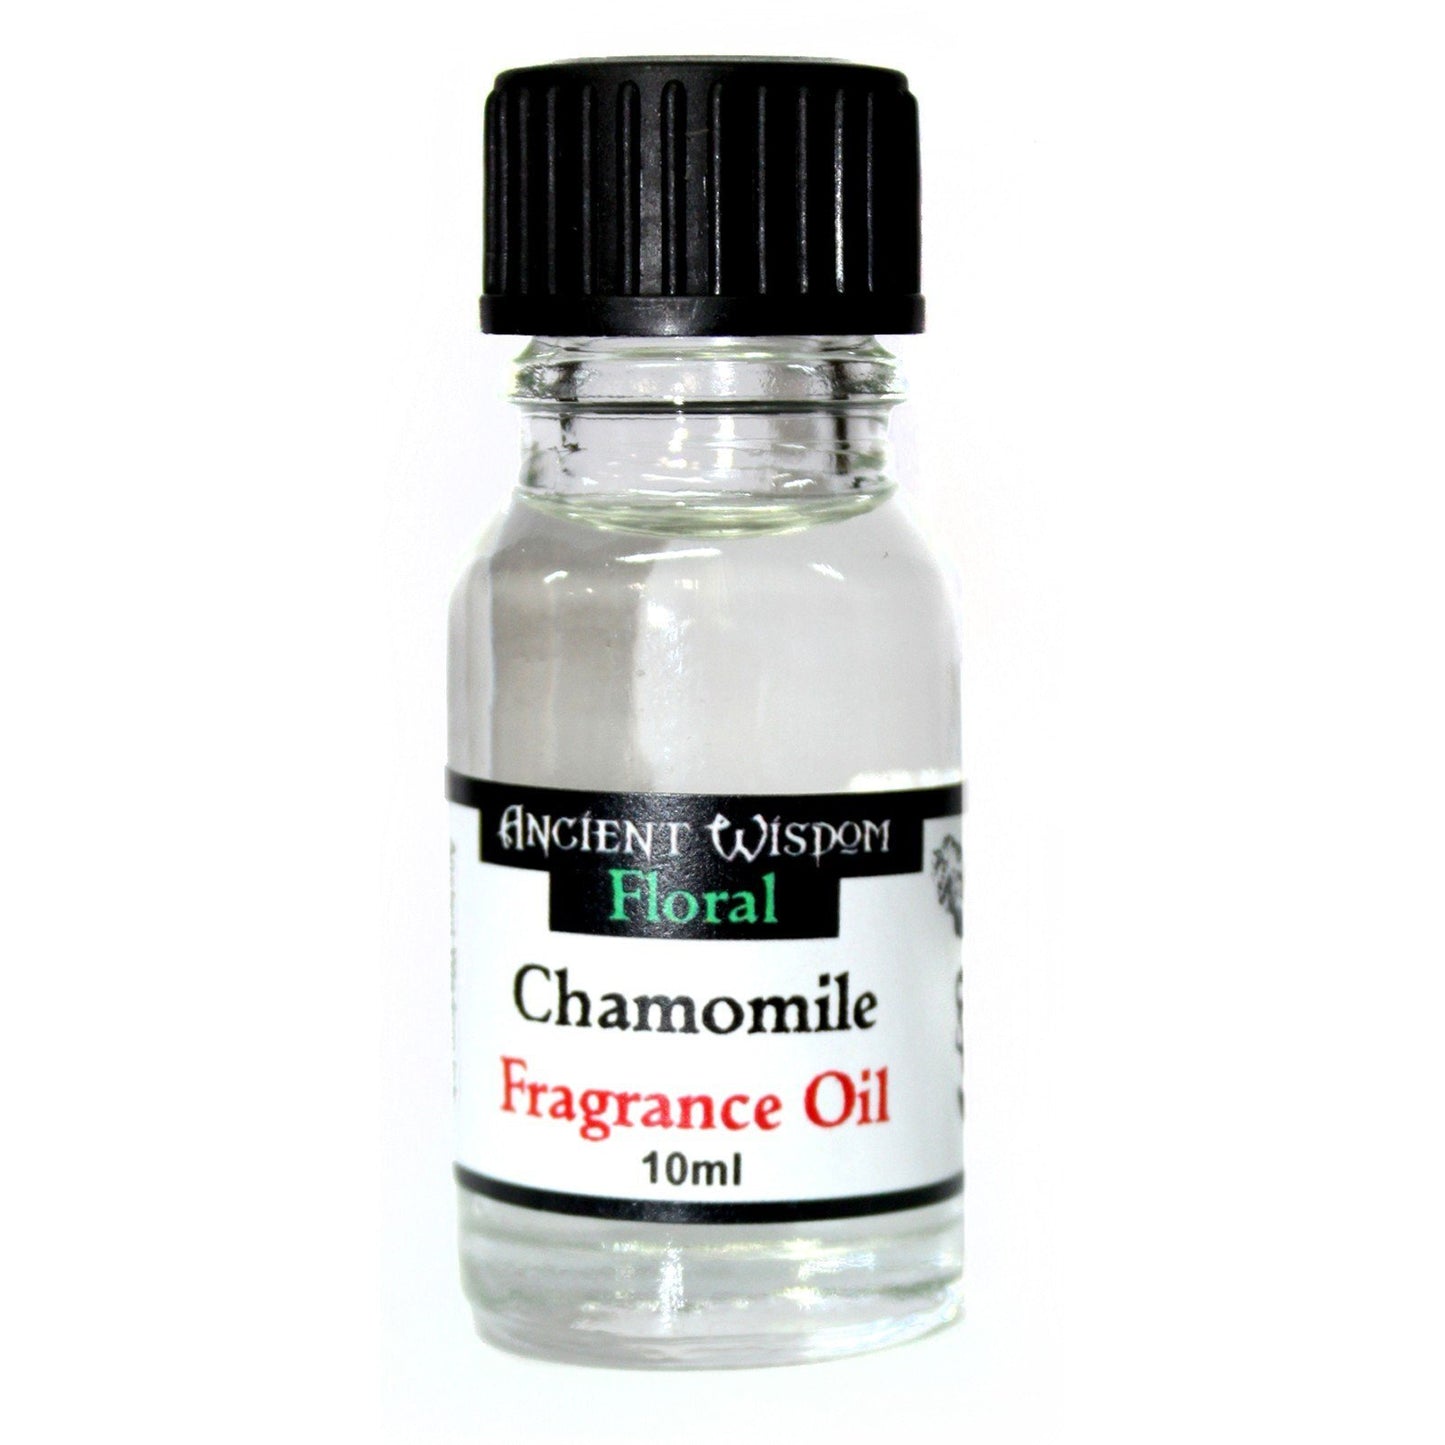 Chamomile Fragrance Oil